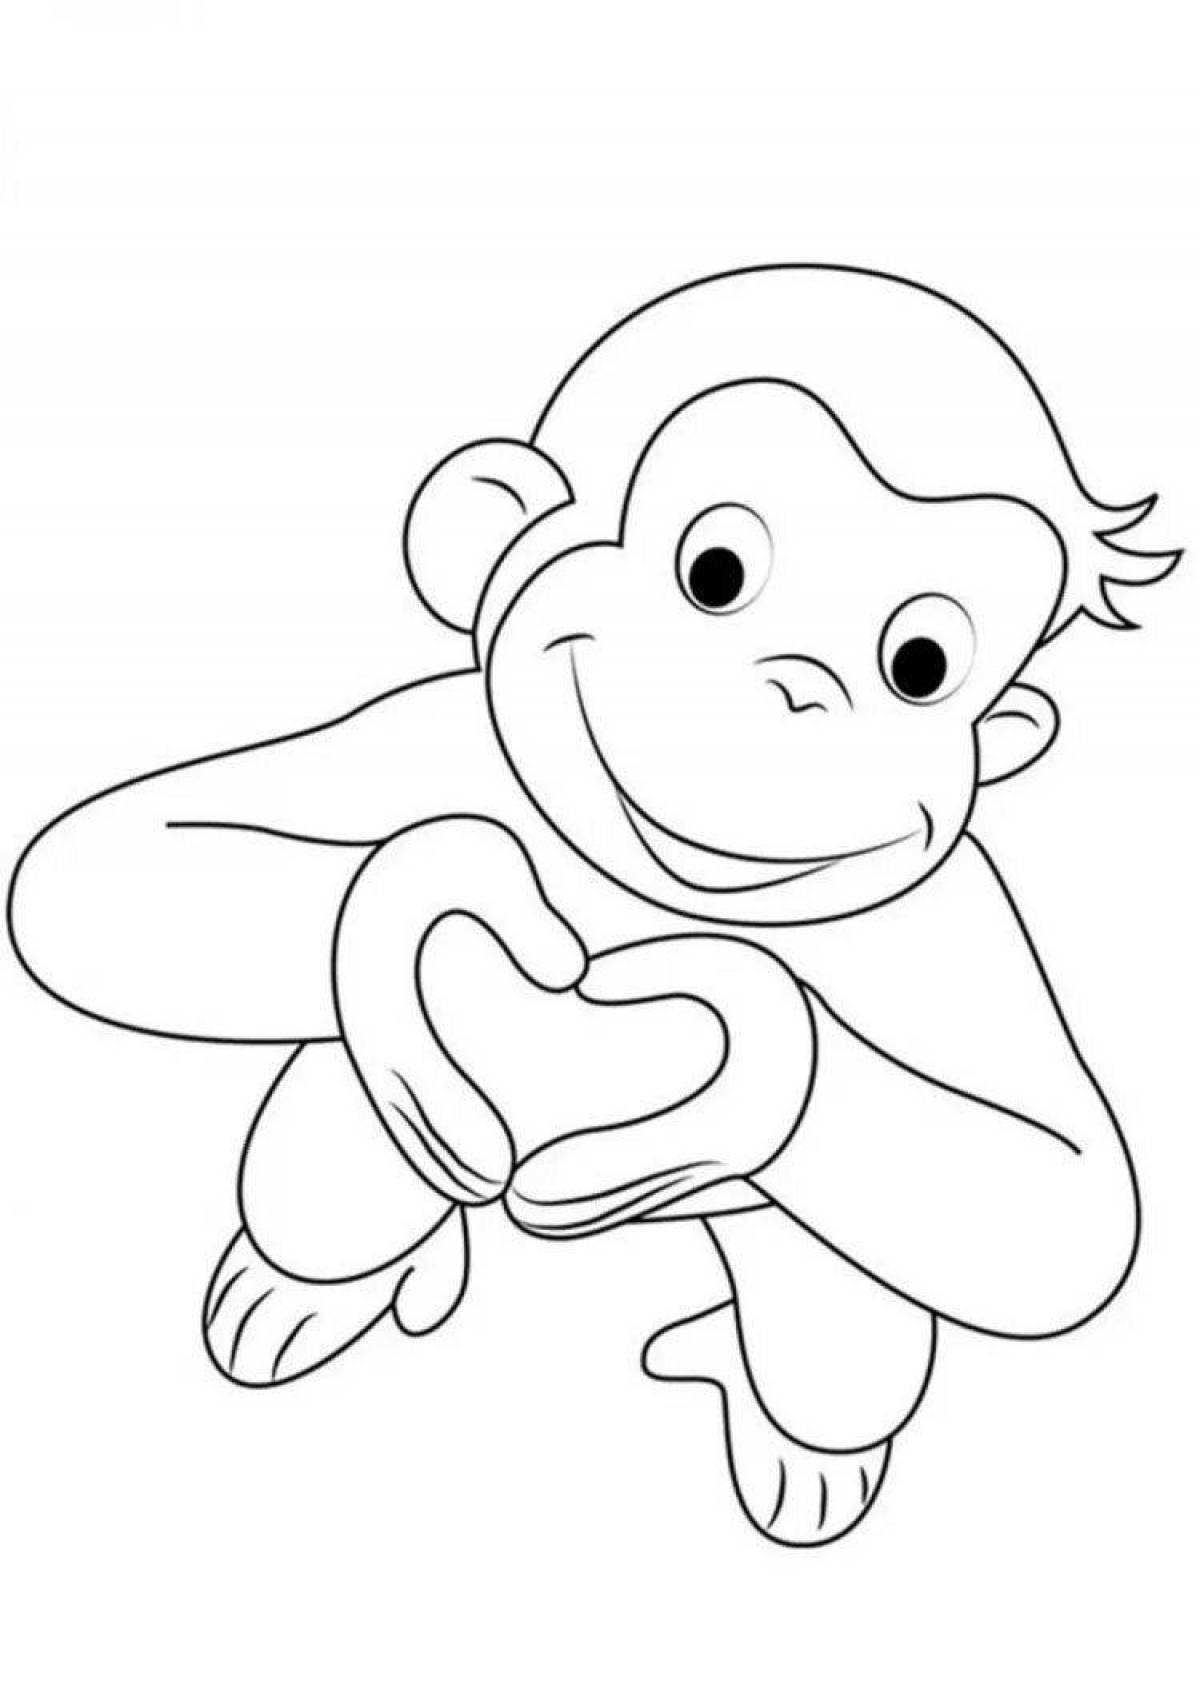 Coloring book energetic monkey